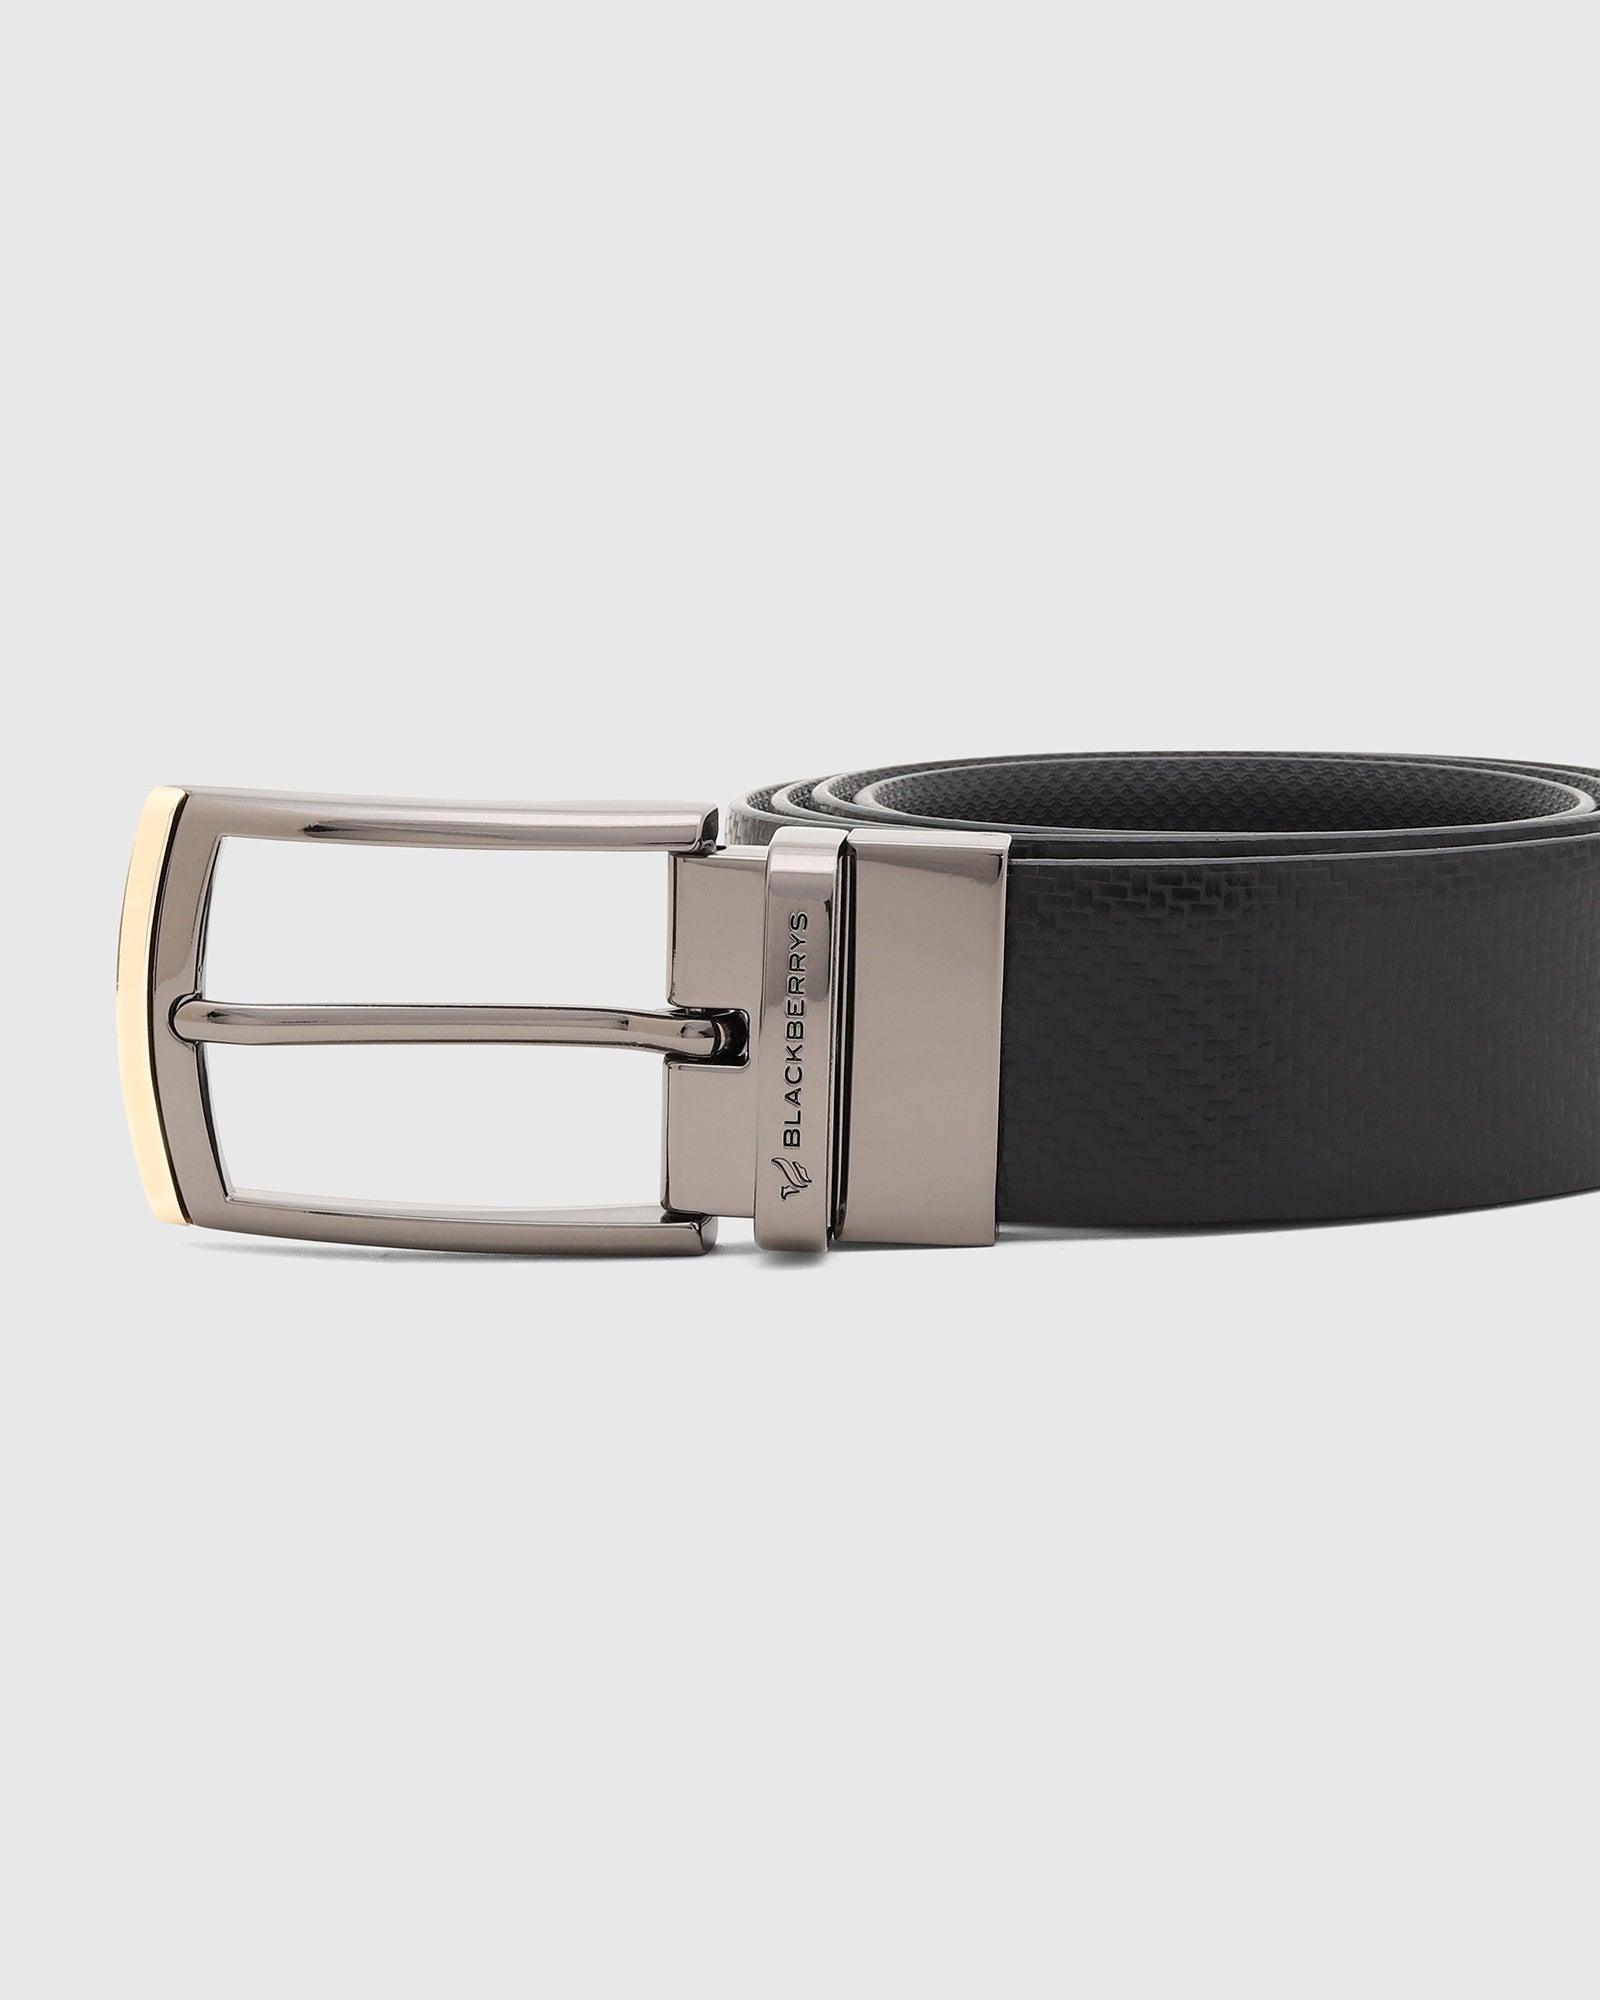 Leather Reversible Black Textured Belt - Stipe